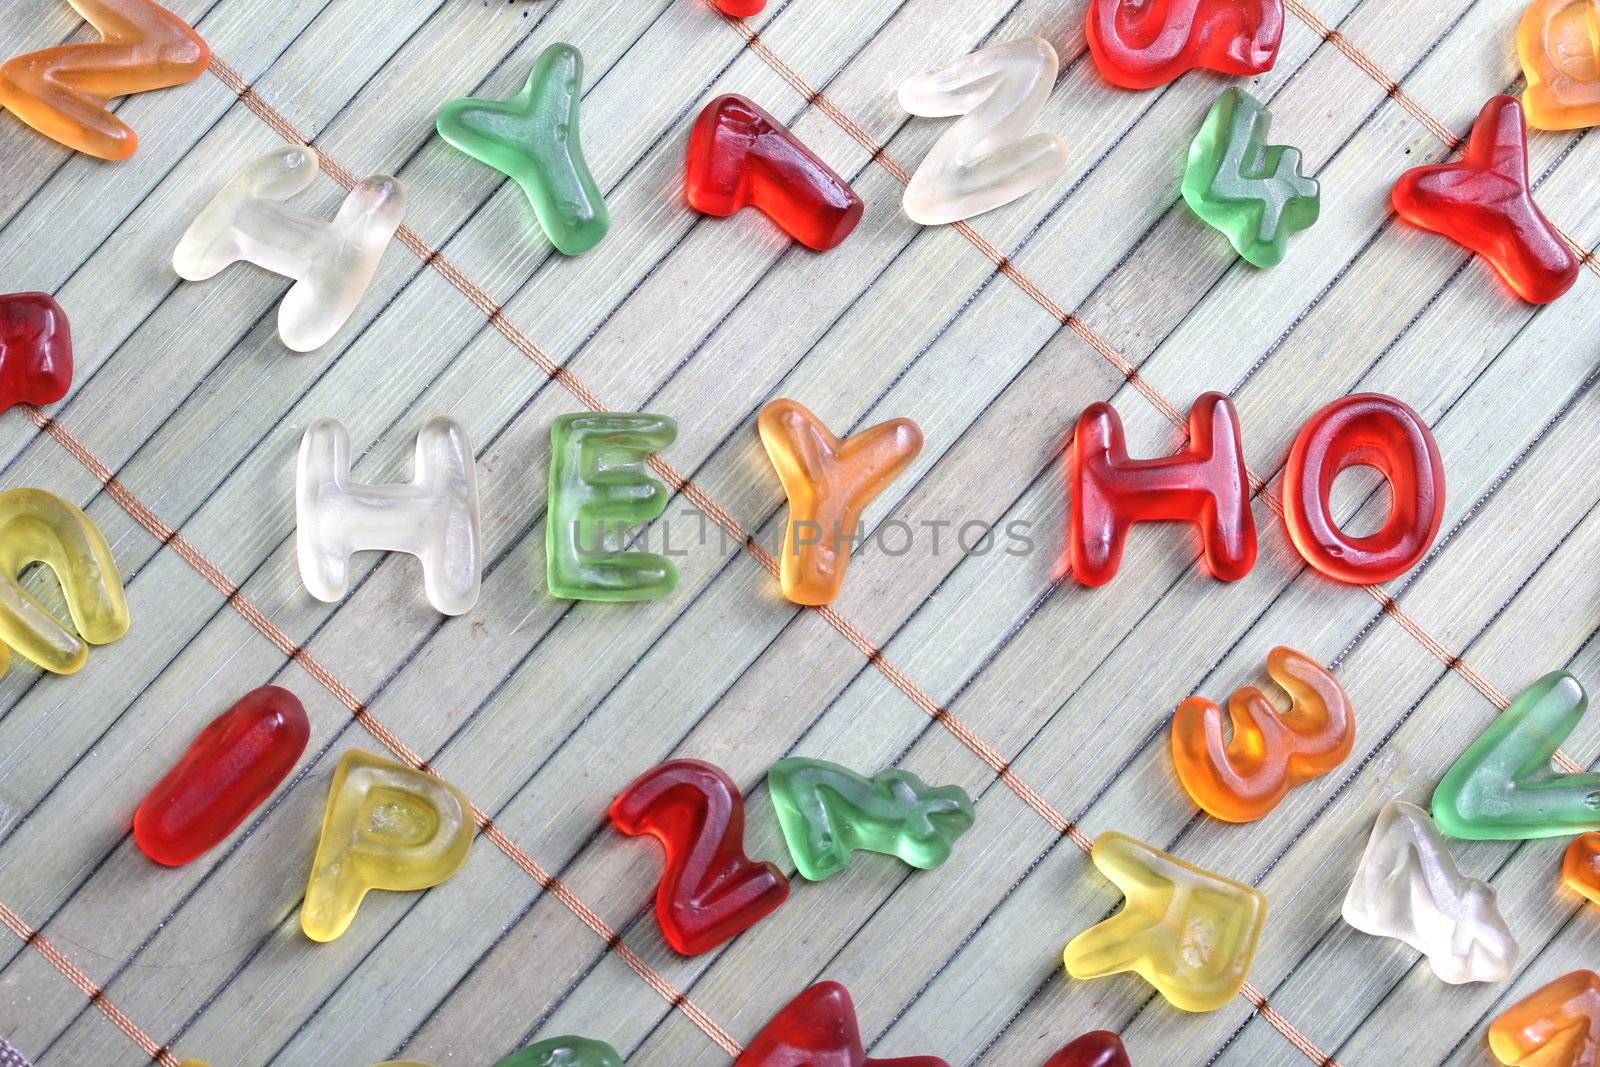 sweet letters hey ho by Teka77